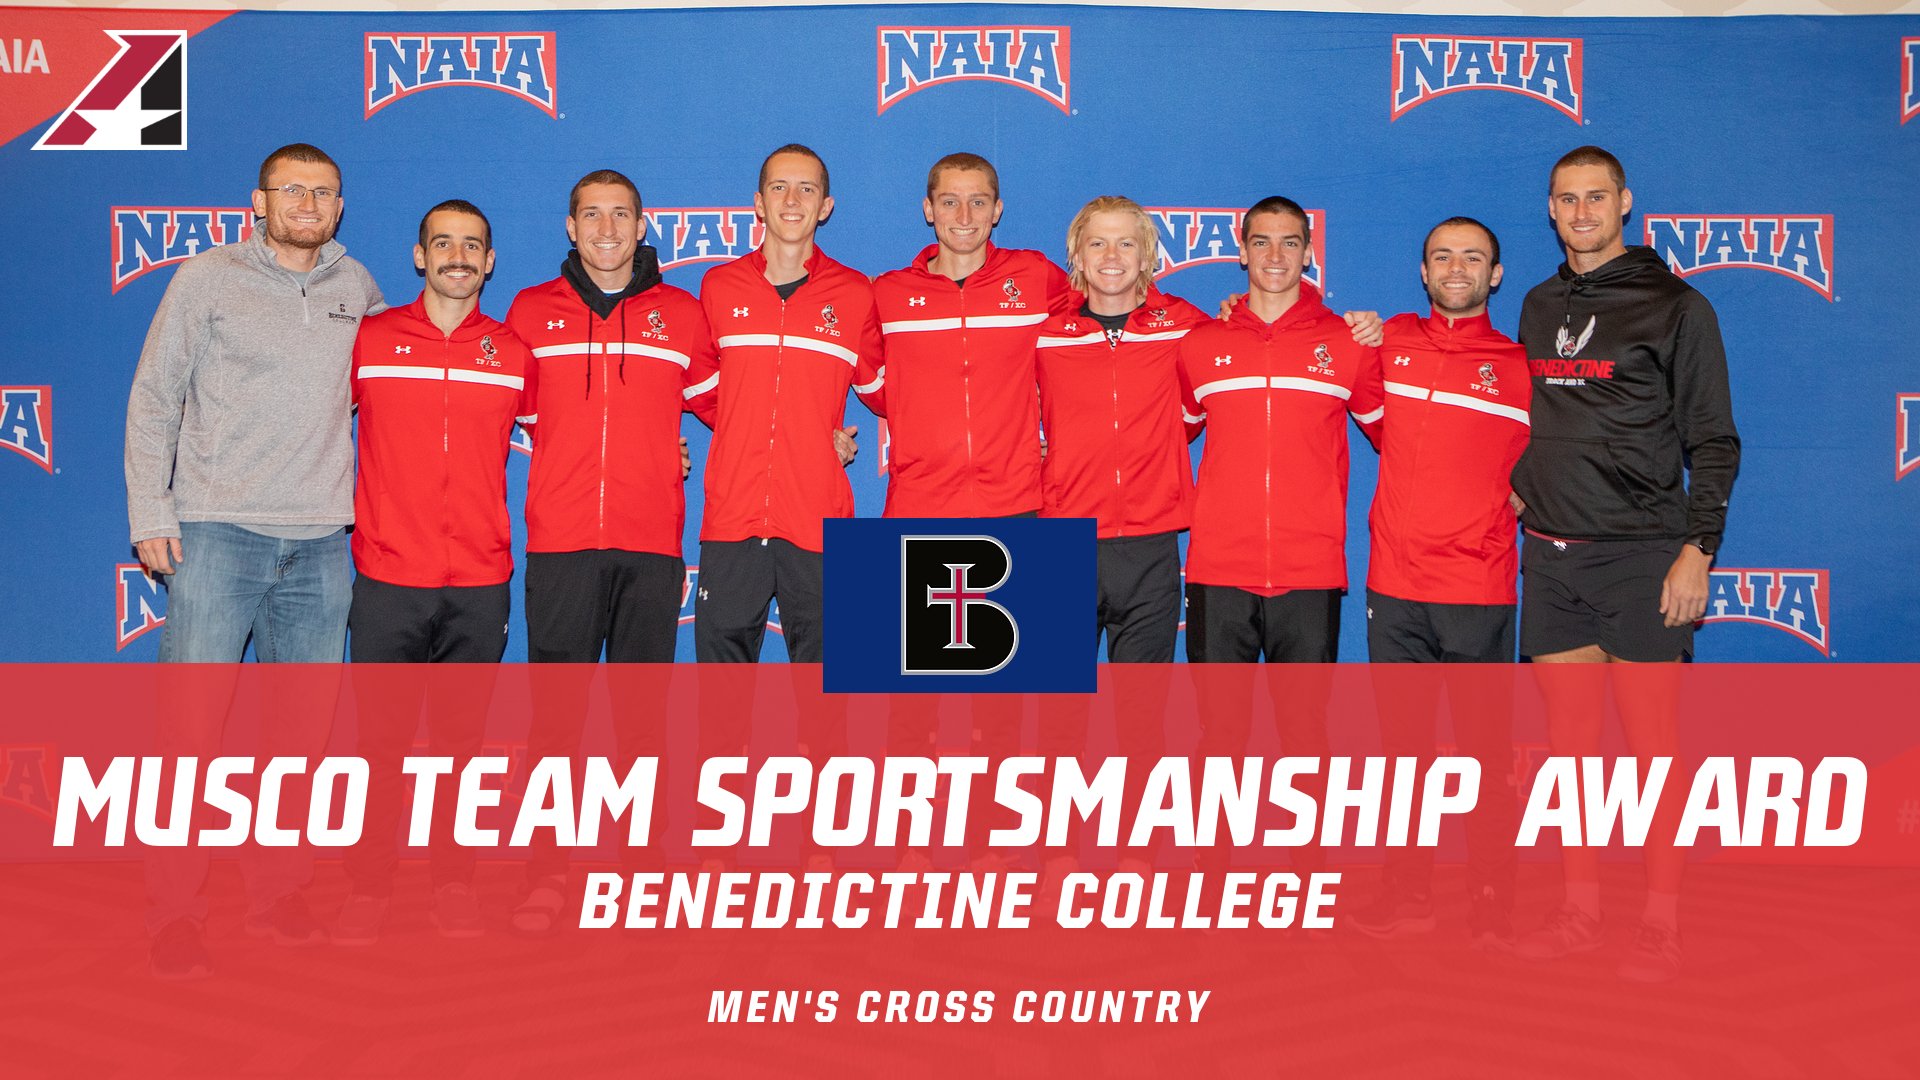 Benedictine College Men’s Cross Country Selected for Musco Team Sportsmanship Award